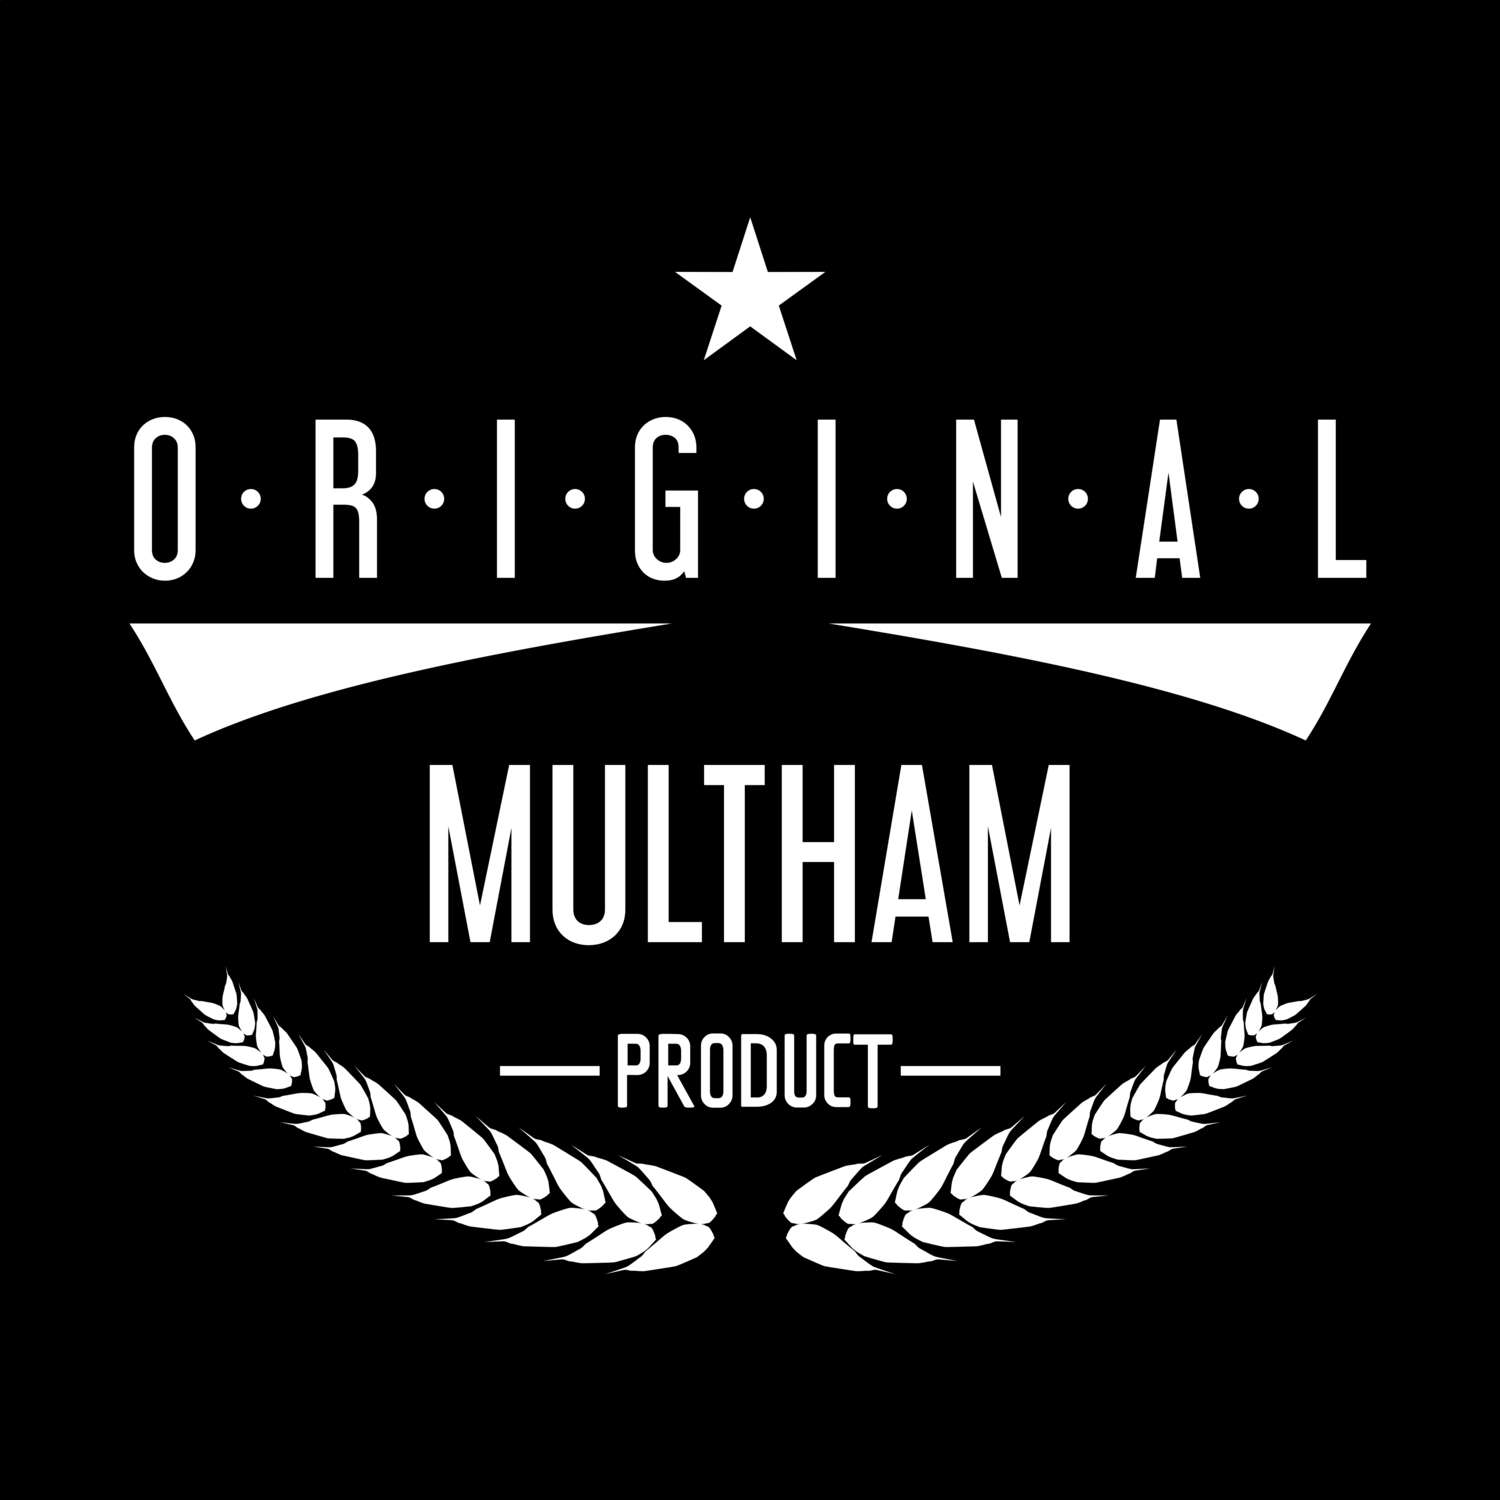 Multham T-Shirt »Original Product«